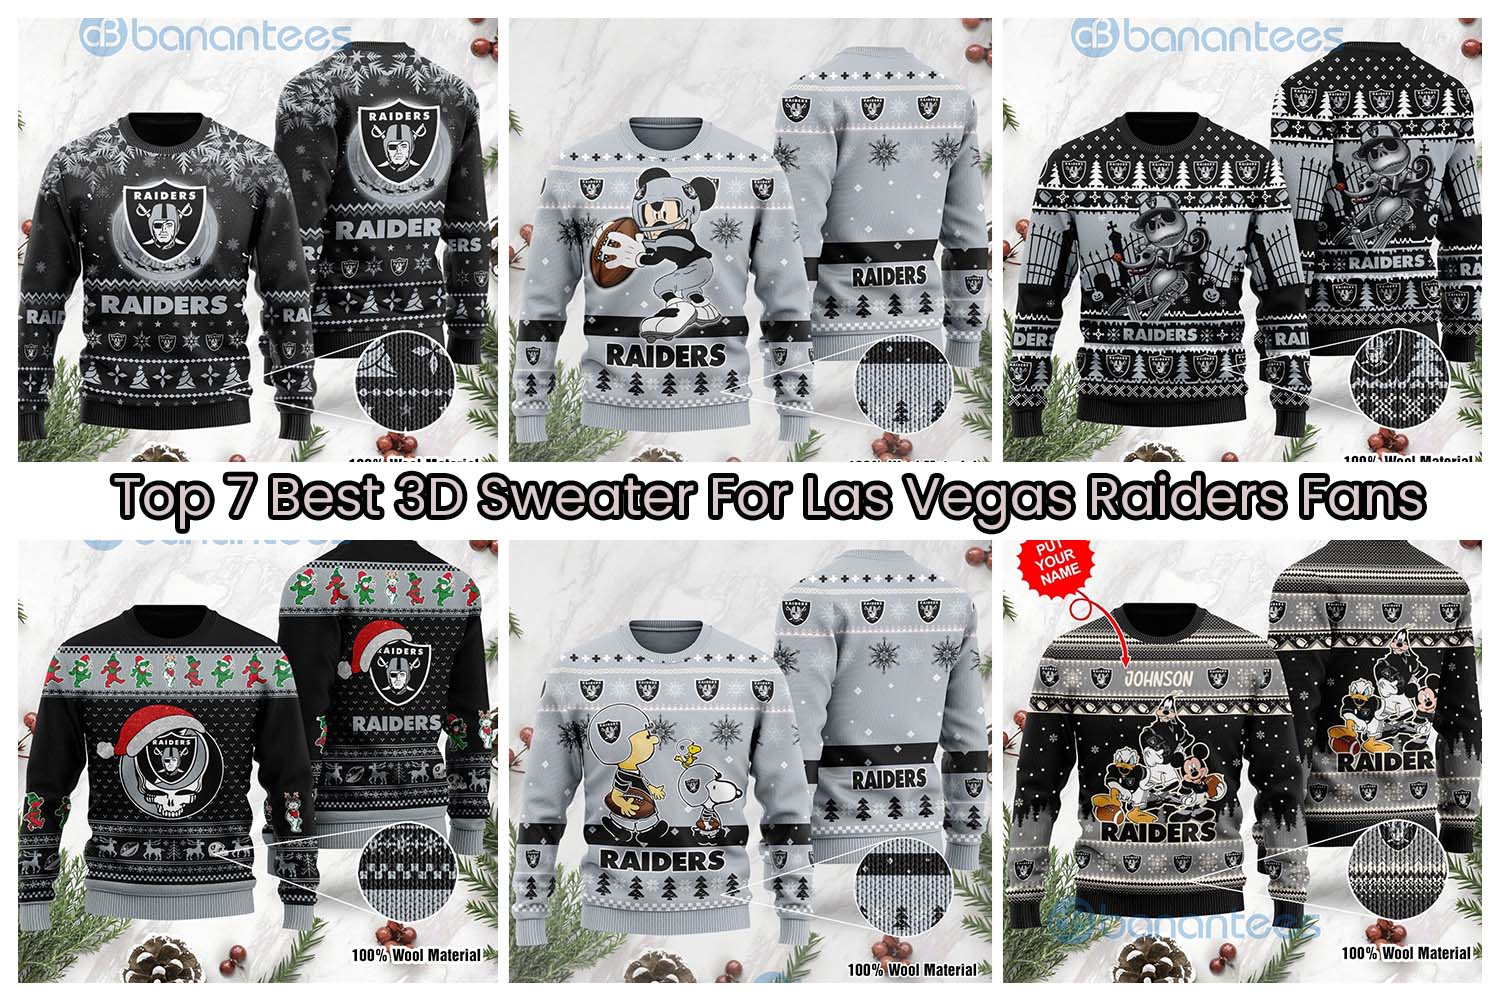 Top 7 Best 3D Sweater For Las Vegas Raiders Fans